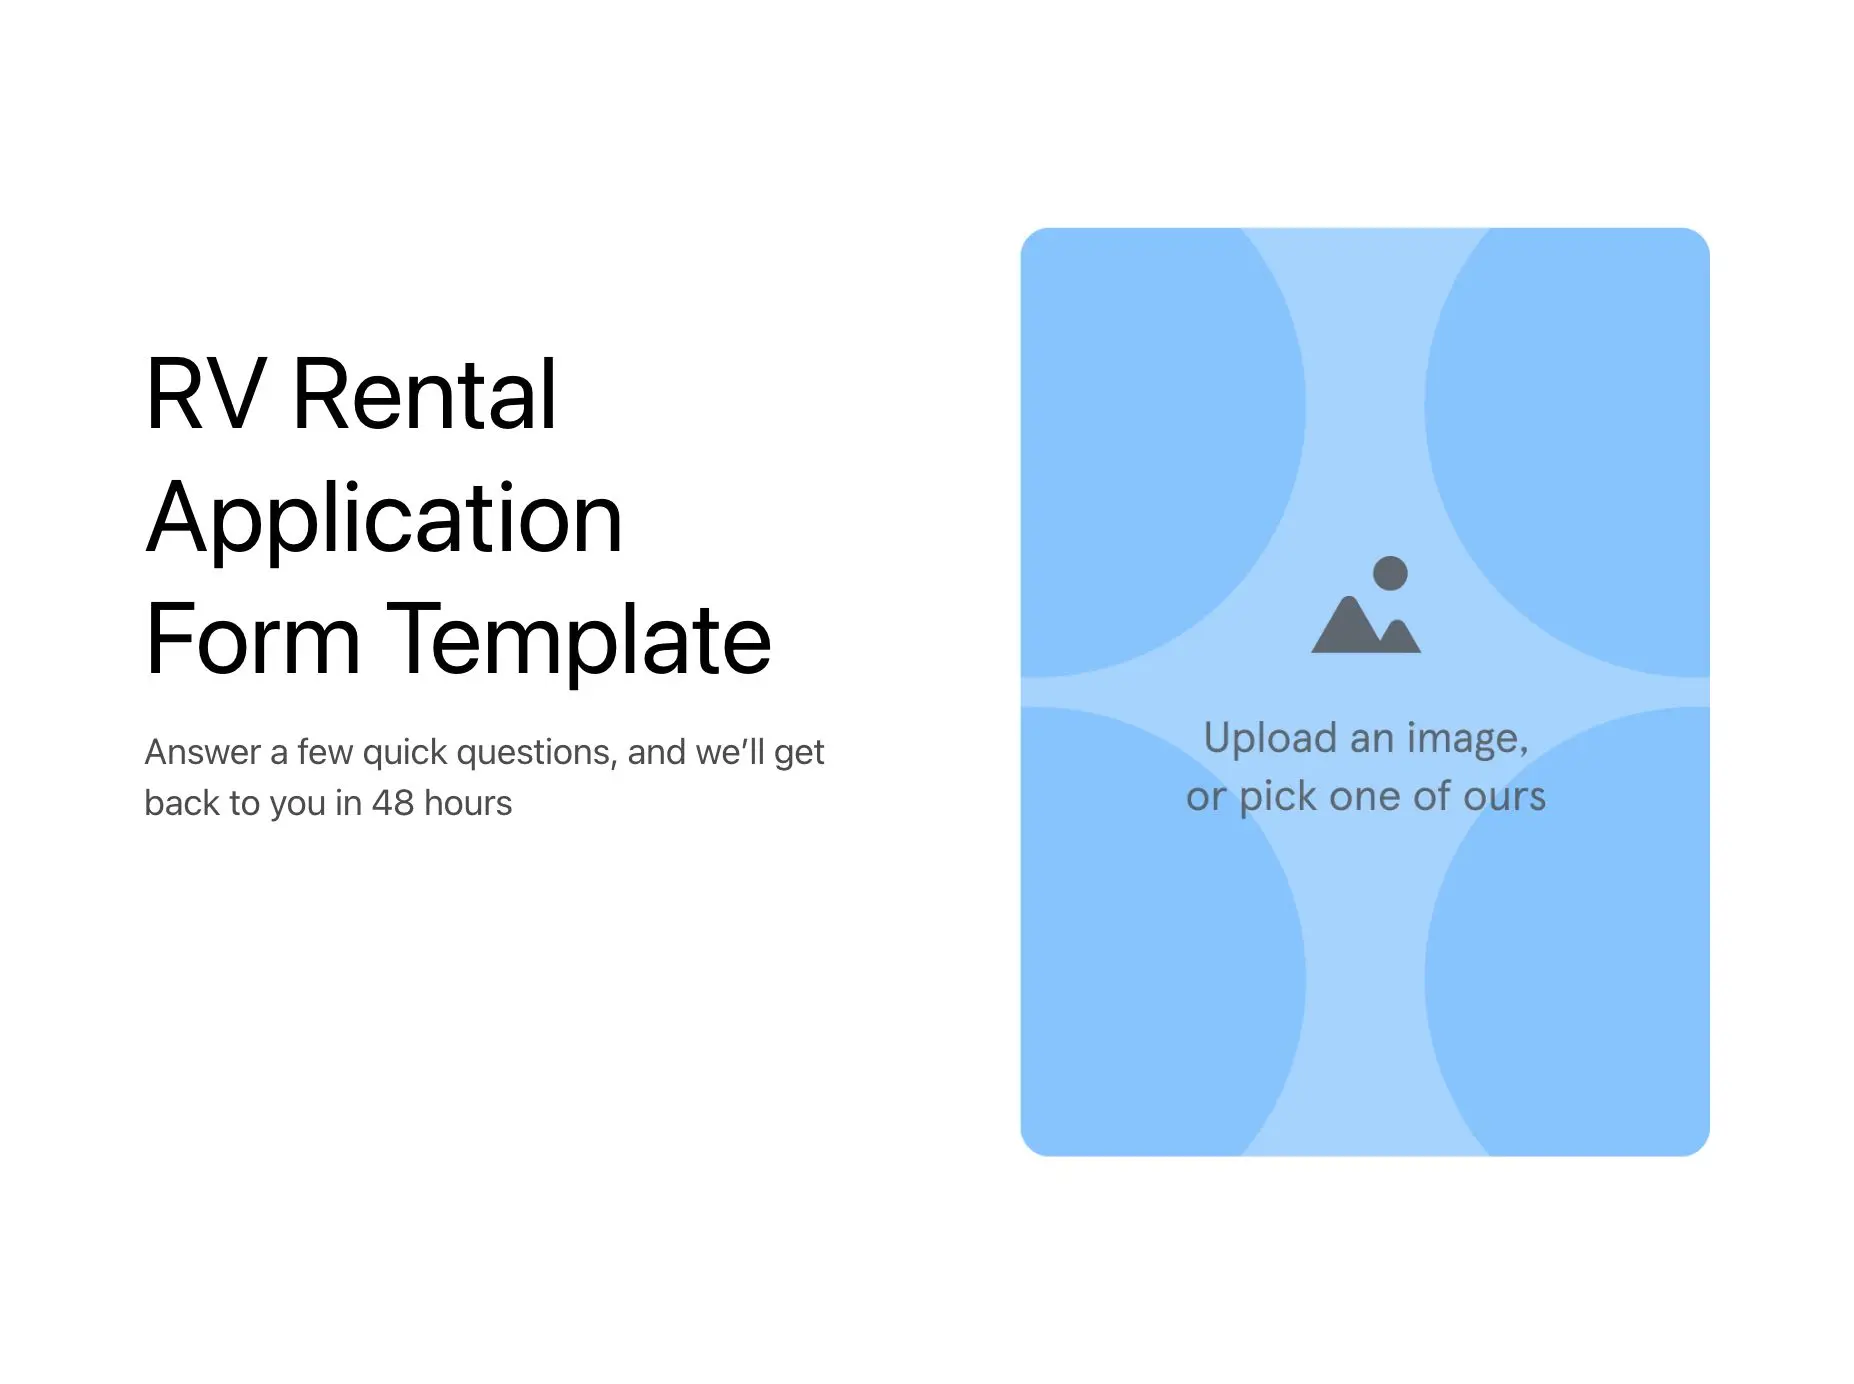 RV Rental Application Form Template Hero